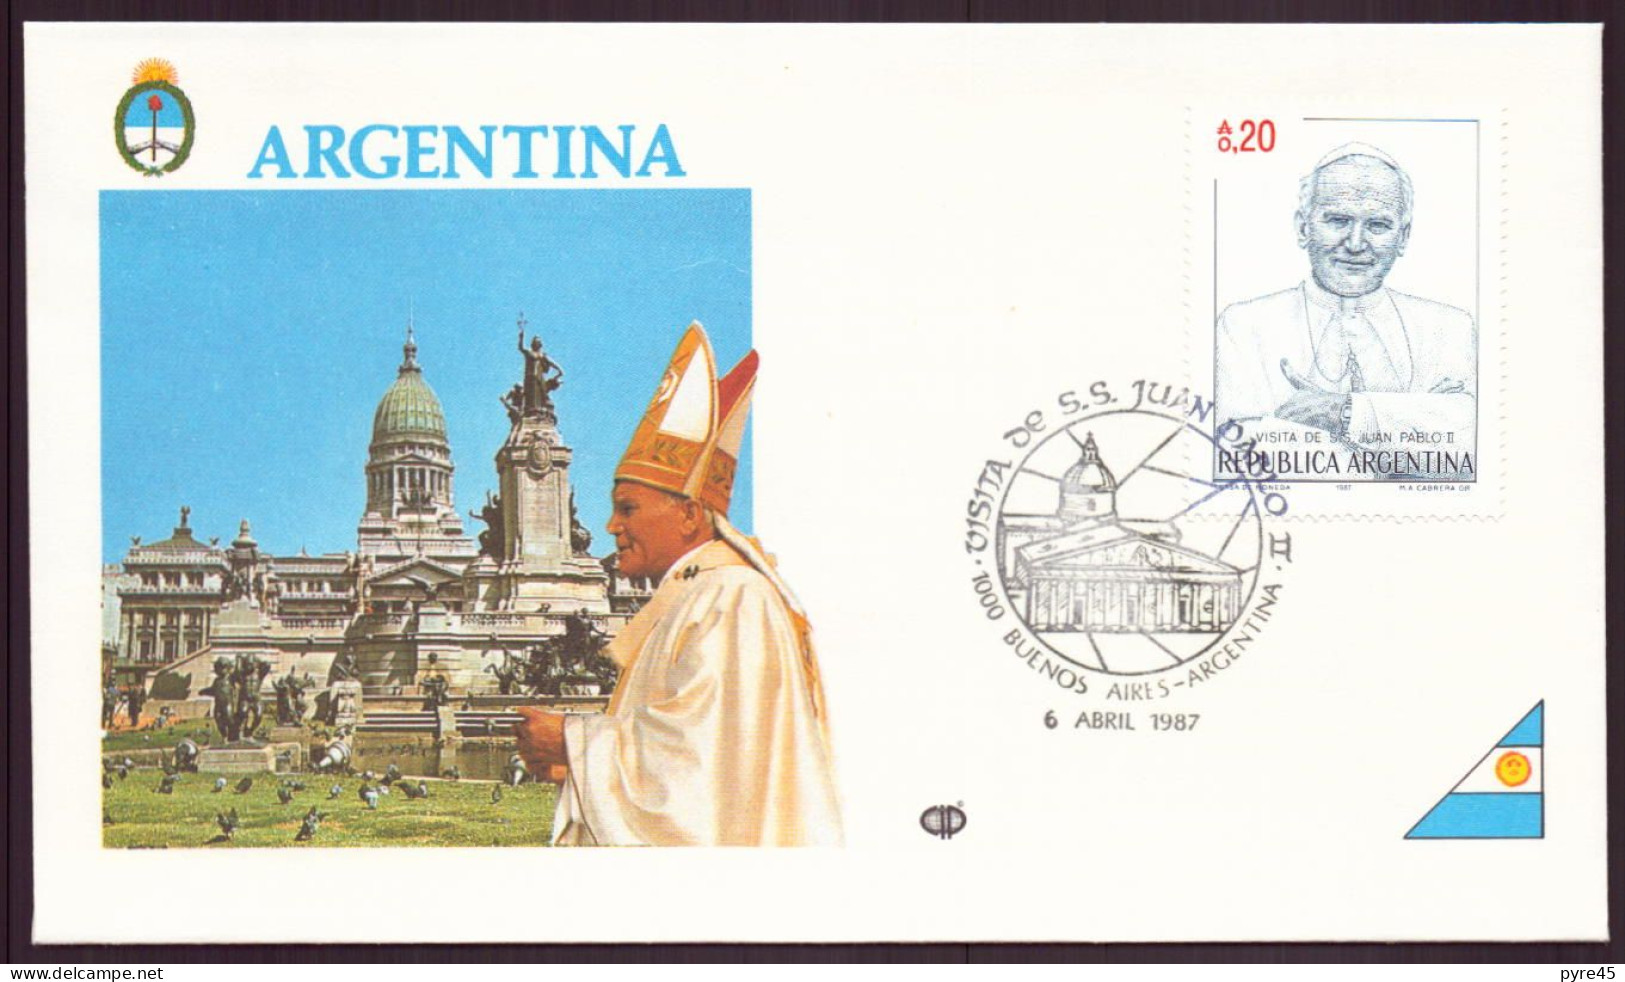 ARGENTINE ENVELOPPE COMMEMORATIVE 1987 BUENOS AIRES VISITA DE SS JUAN PABLO II - Covers & Documents